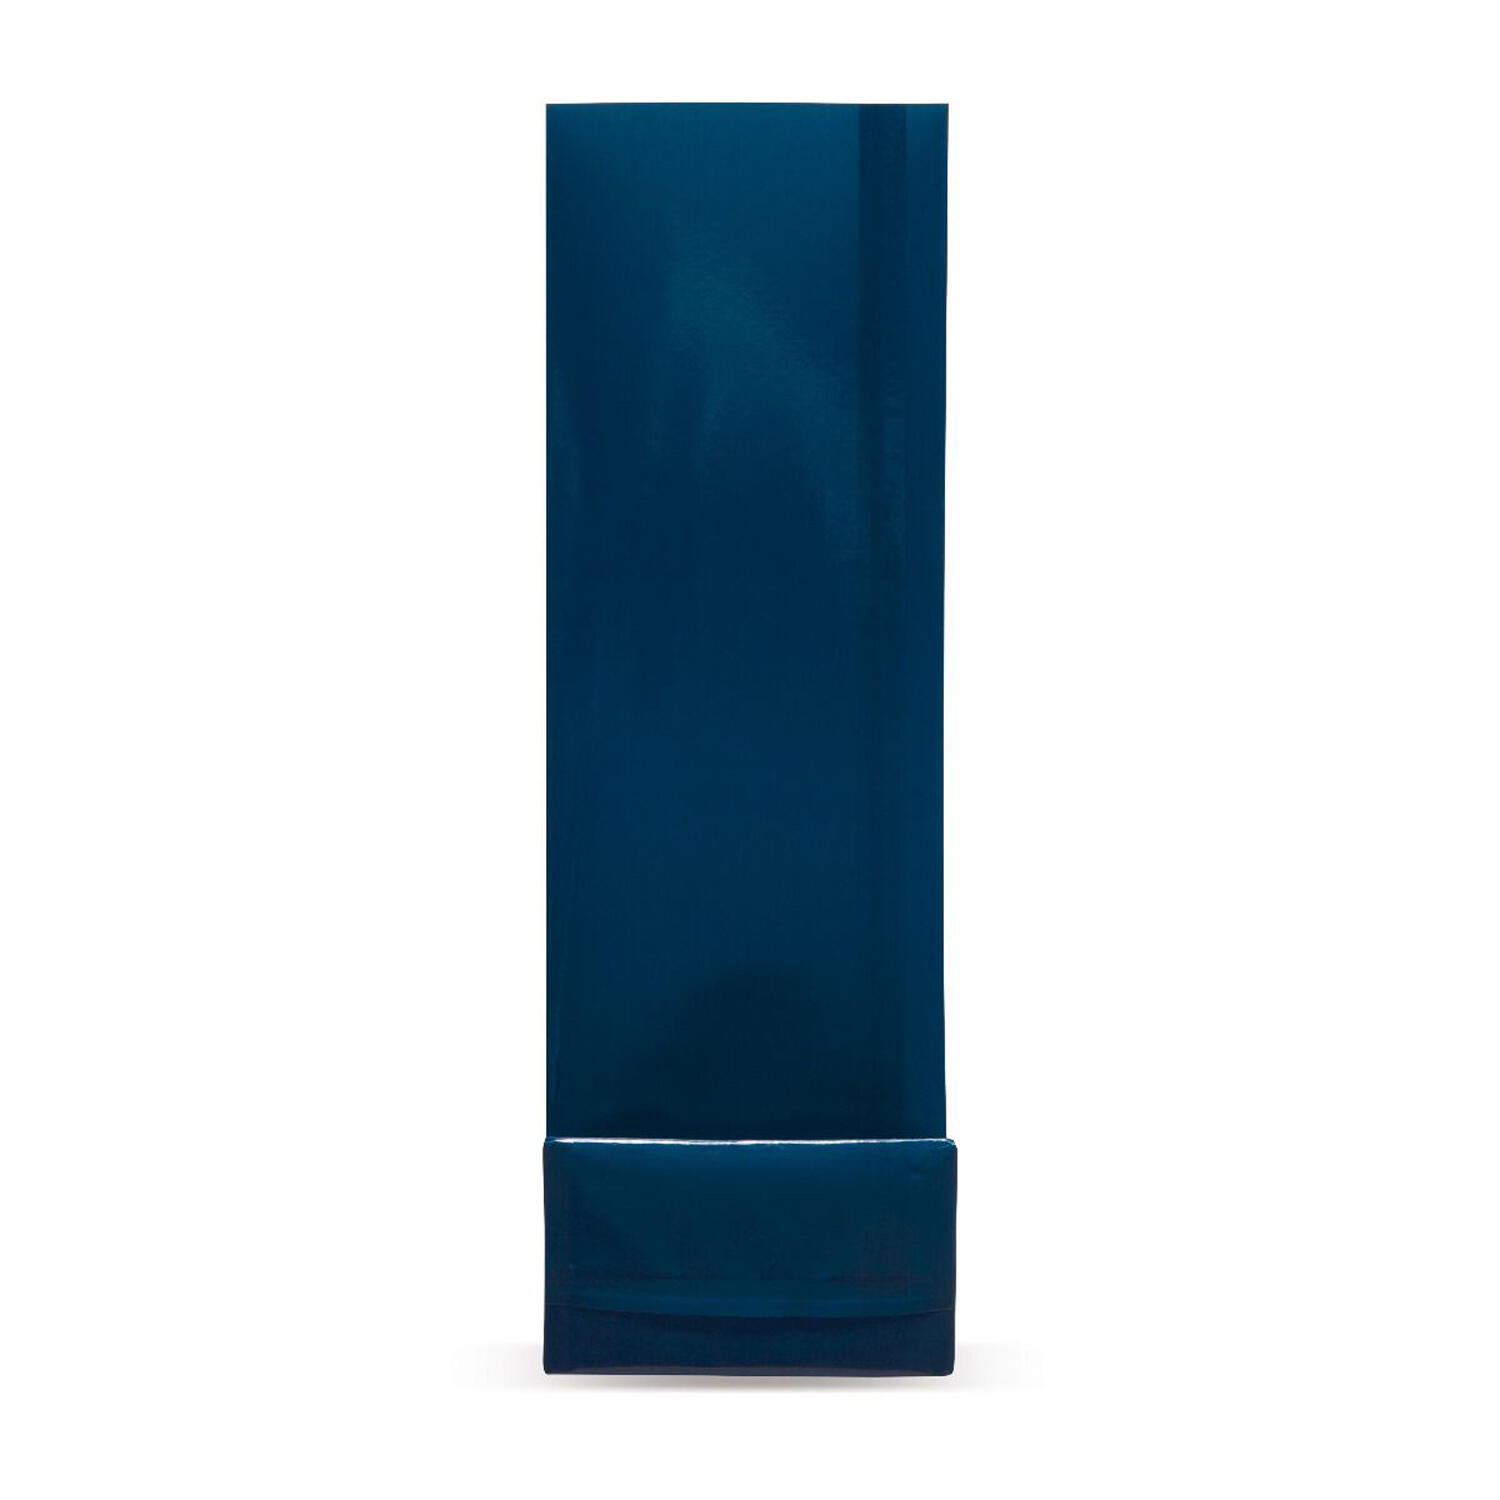 Blockbodenbeutel Blau 105 + 65mm x 297mm 4-lagig, 500 Stk.